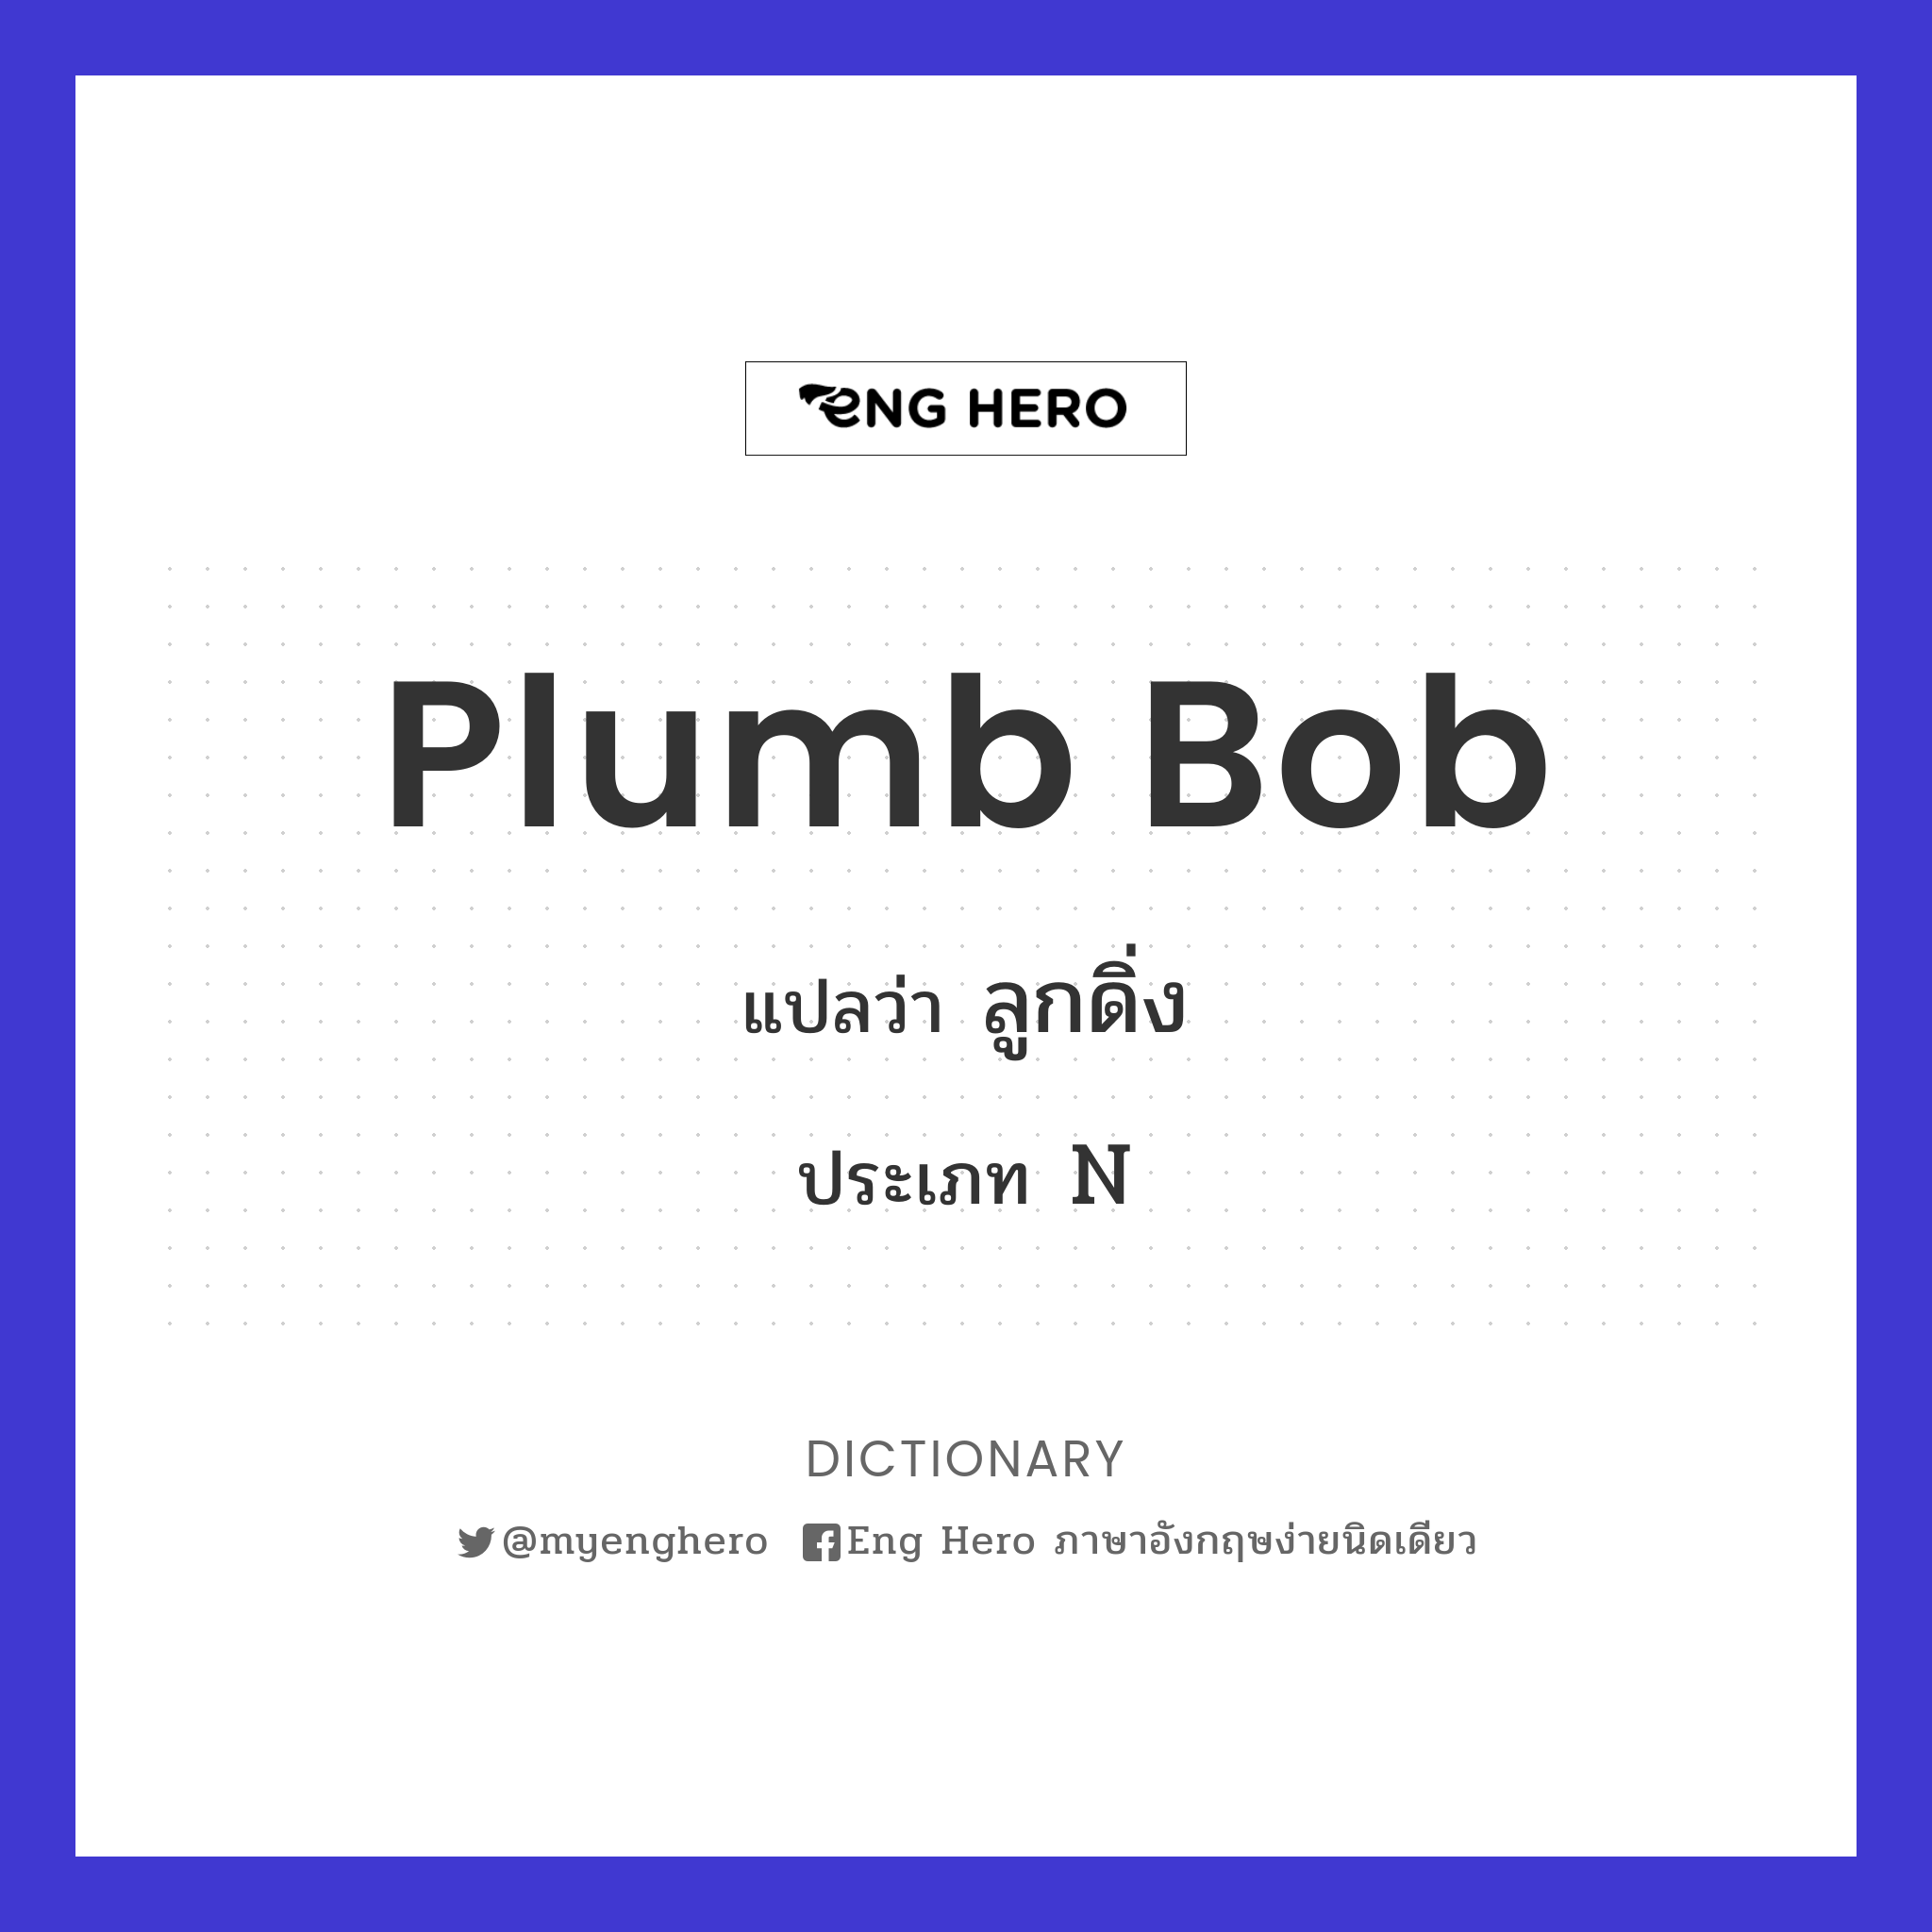 plumb bob